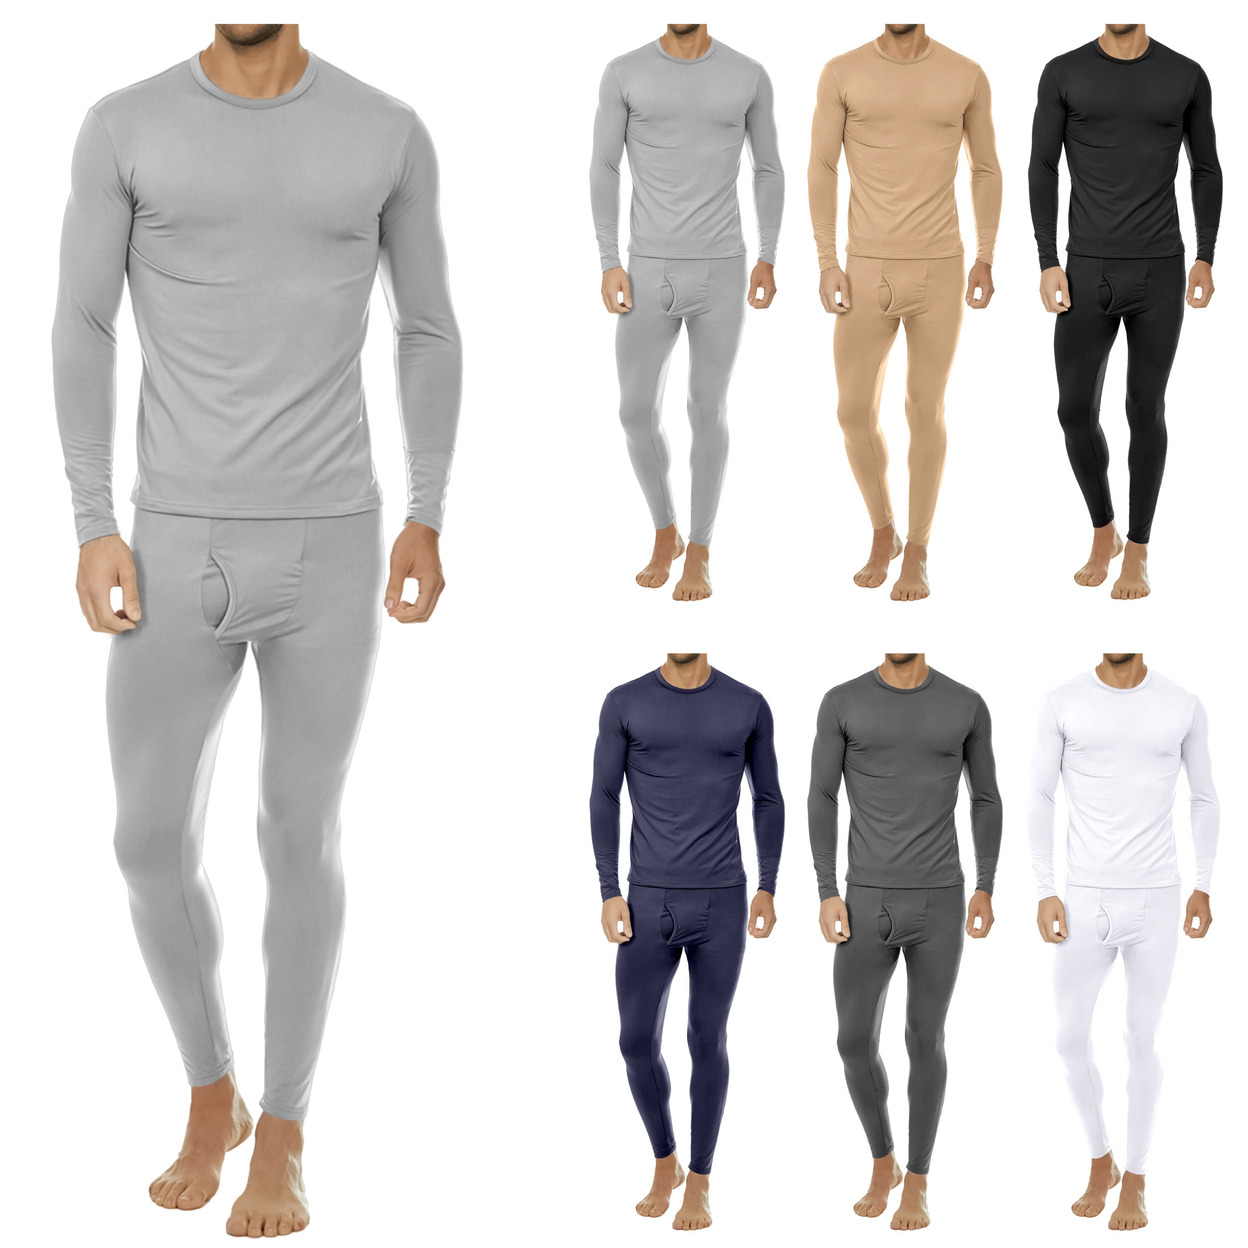 2-Sets: Men's Winter Warm Fleece Lined Thermal Underwear Set For Cold Weather - Black&grey, Large